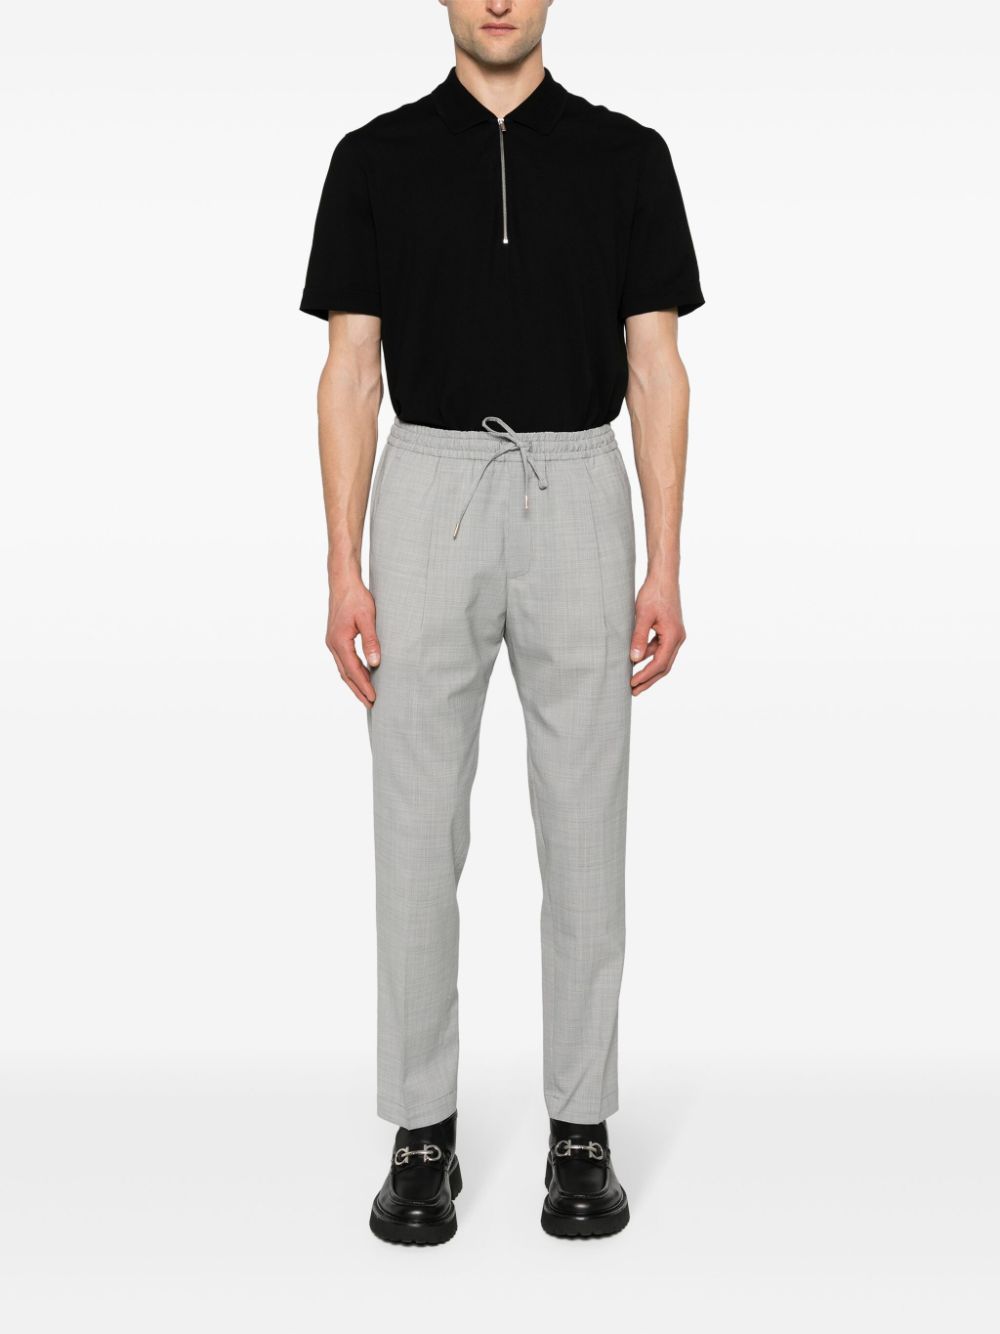 Pantalone Wimbledon con coulisse grigio